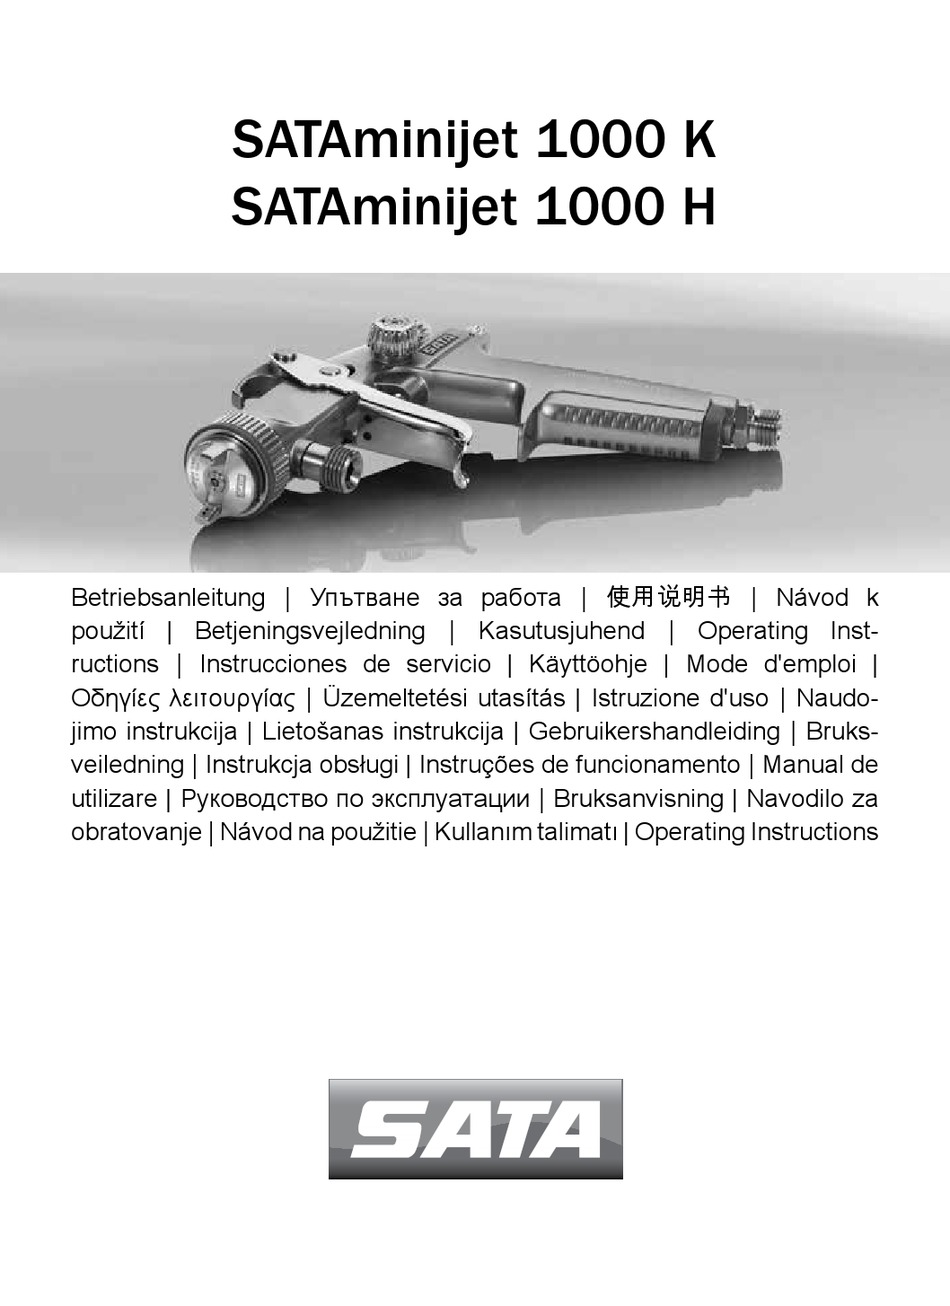 SATA MINIJET 1000 K RP OPERATING INSTRUCTIONS MANUAL Pdf Download .